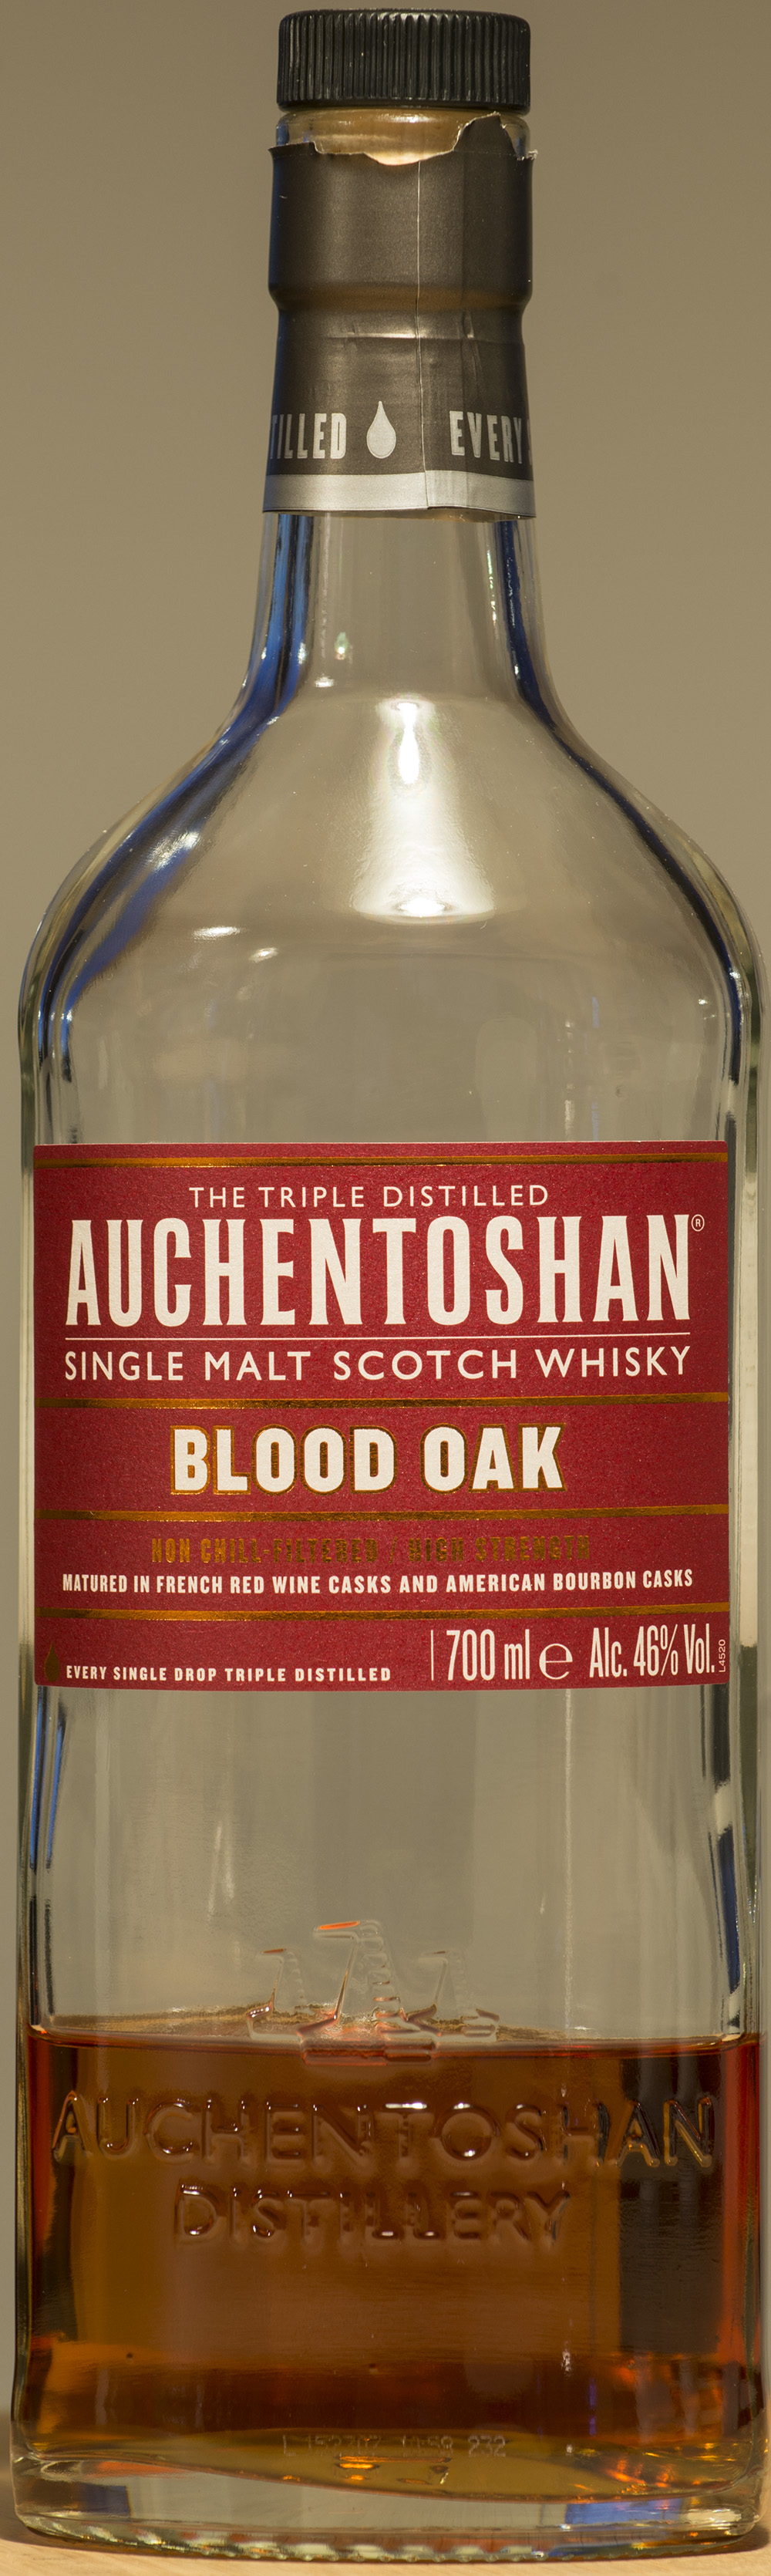 Billede: DSC_9090 - Auchentoshan Blood Oak - bottle front.jpg